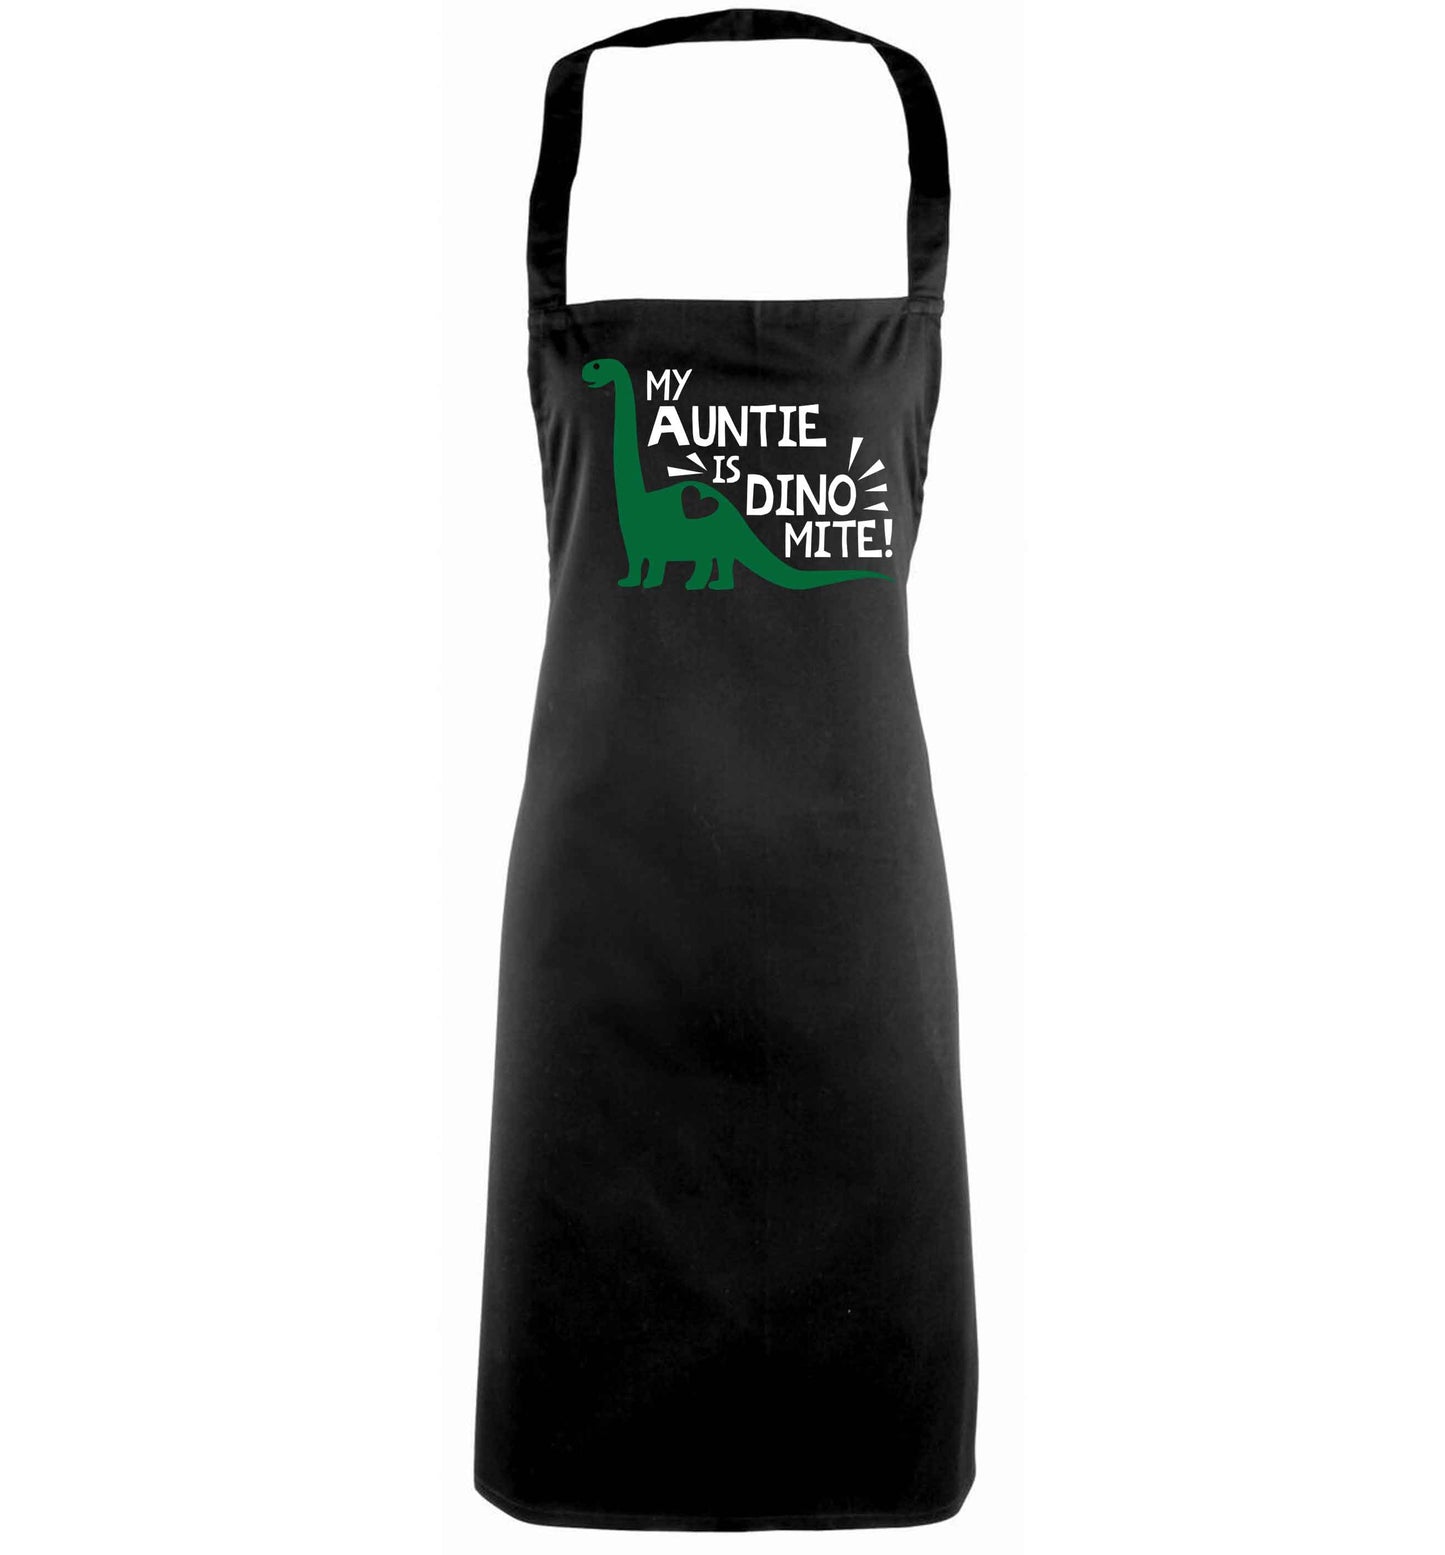 My auntie is dinomite! black apron